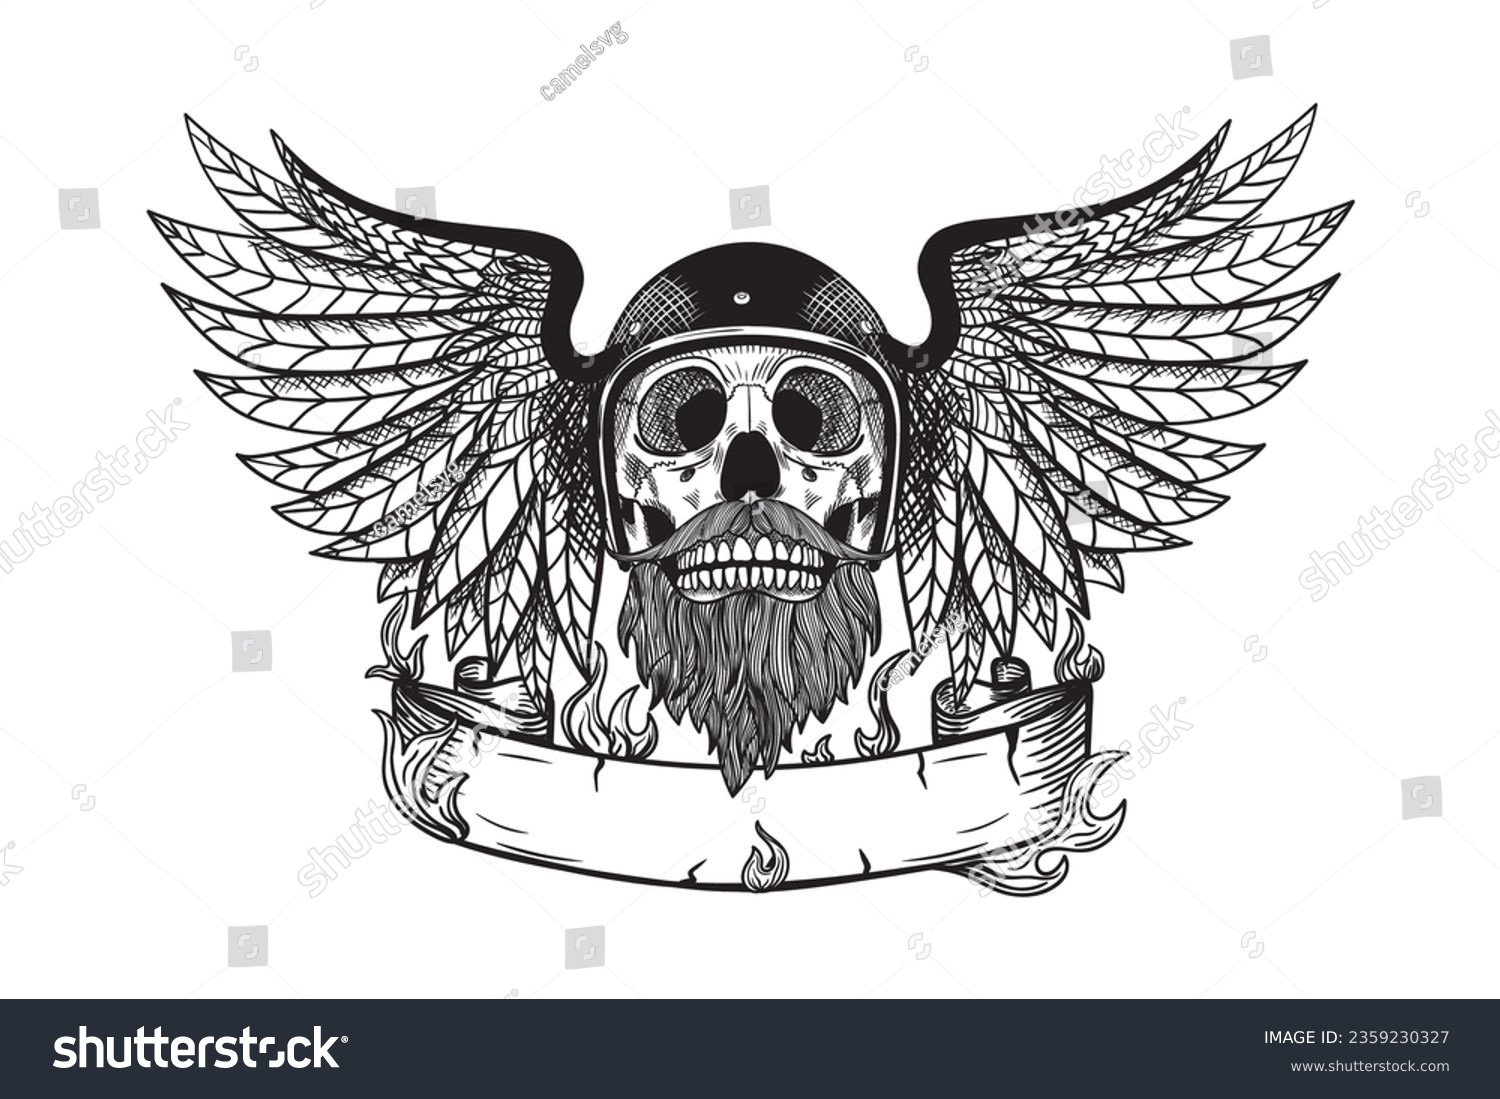 SVG of Skull with Beard SVG, Skull with Wings SVG, Biker, Bearded, Hand-Drawn Skull Illustration, Motorcycle Rider, Tattoo Style SVG, Motorcycle Club Design, Biker Artwork, Cool Skull svg